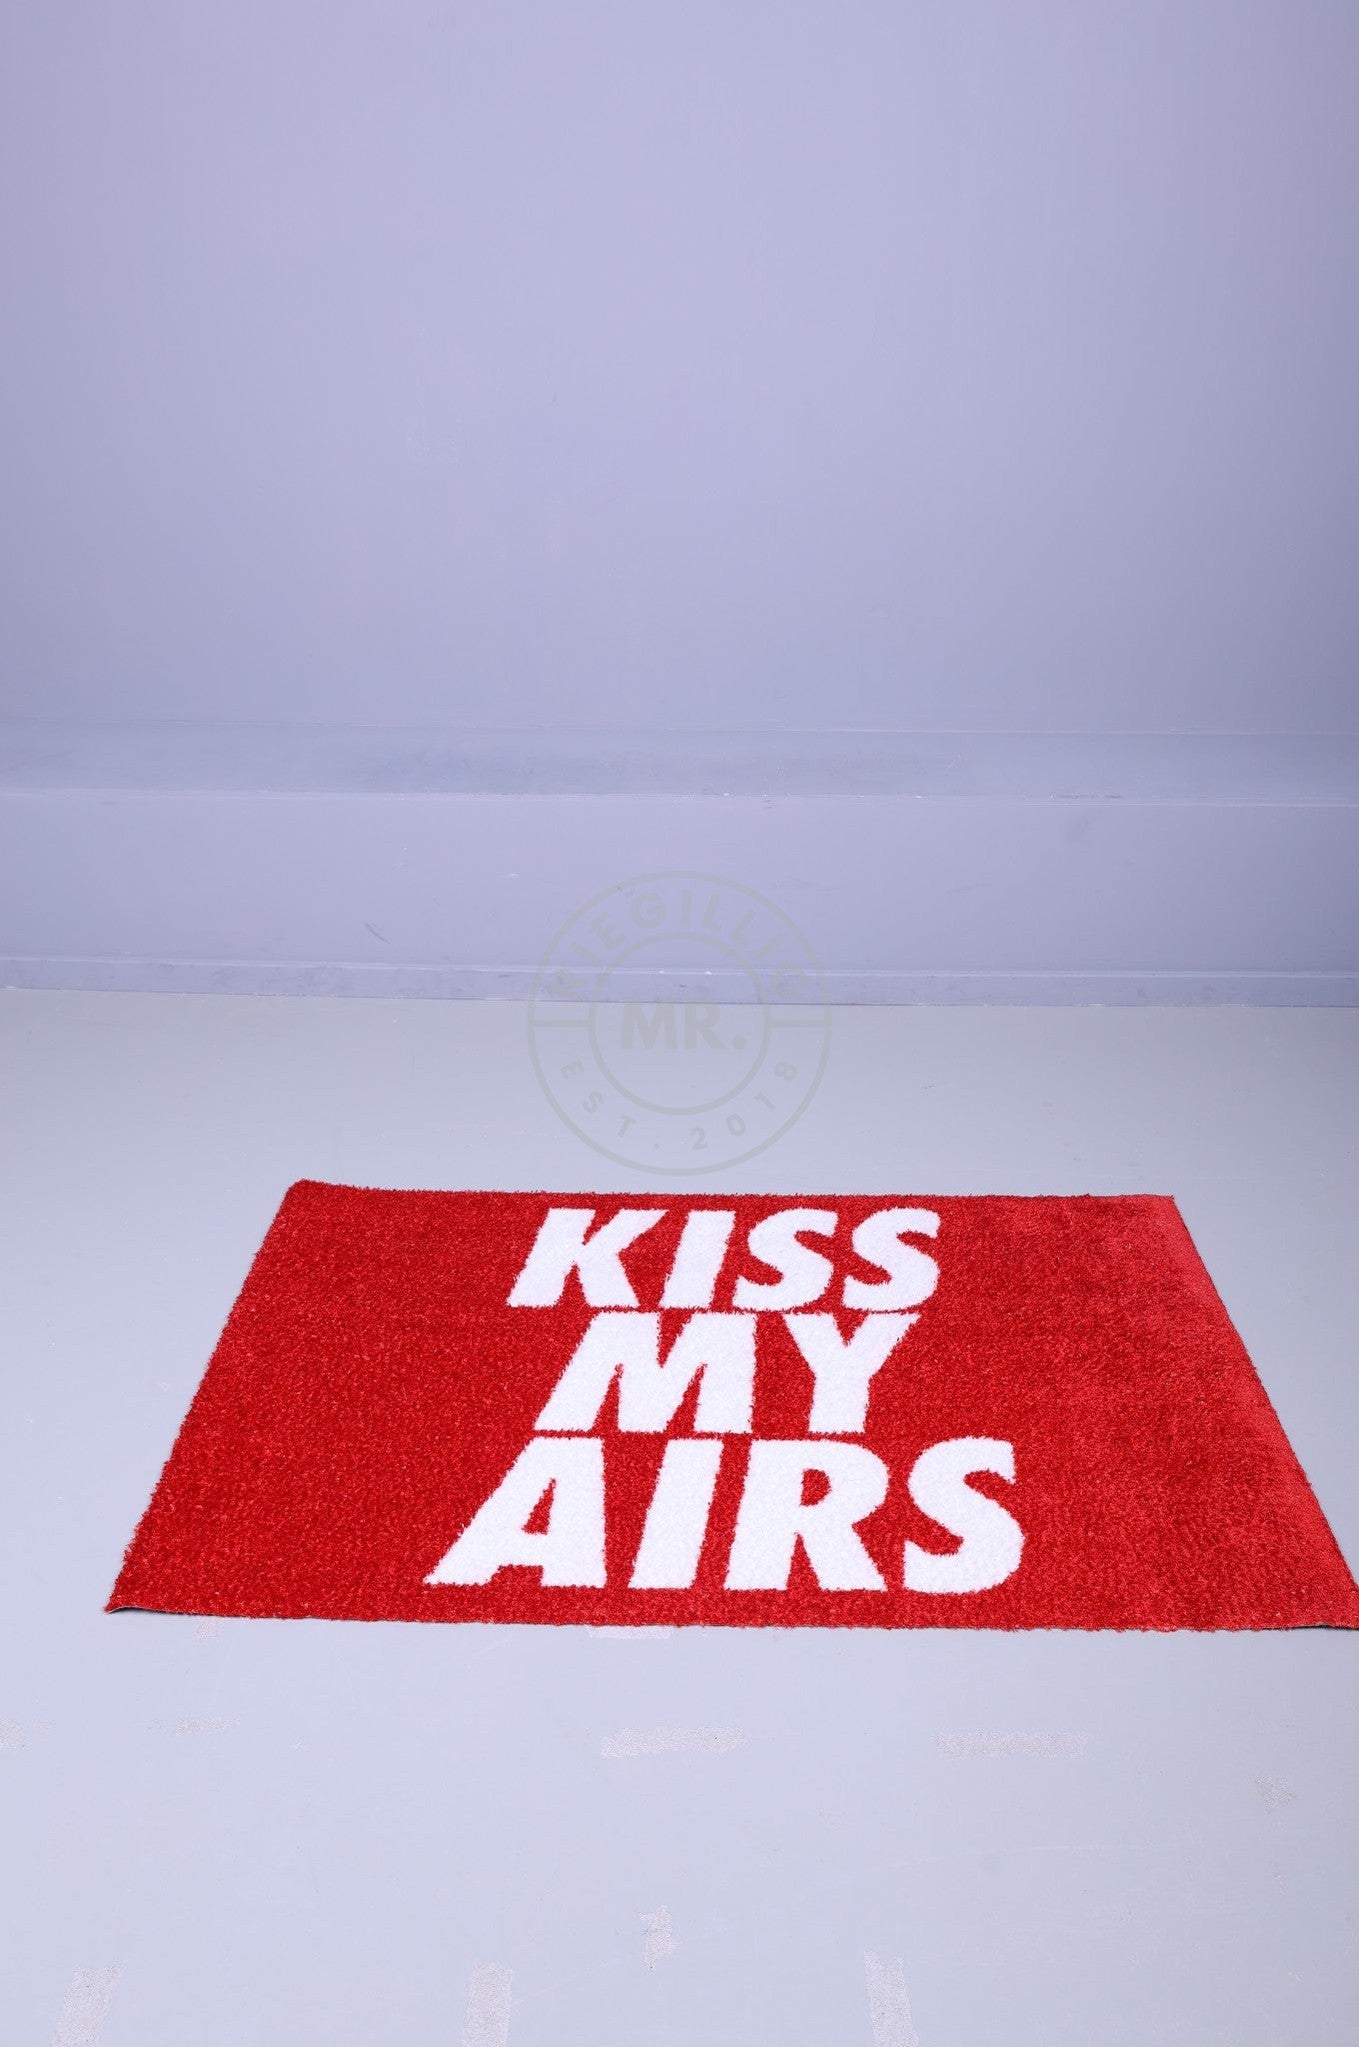 Doormat - KISS MY AIRS - Red-at MR. Riegillio